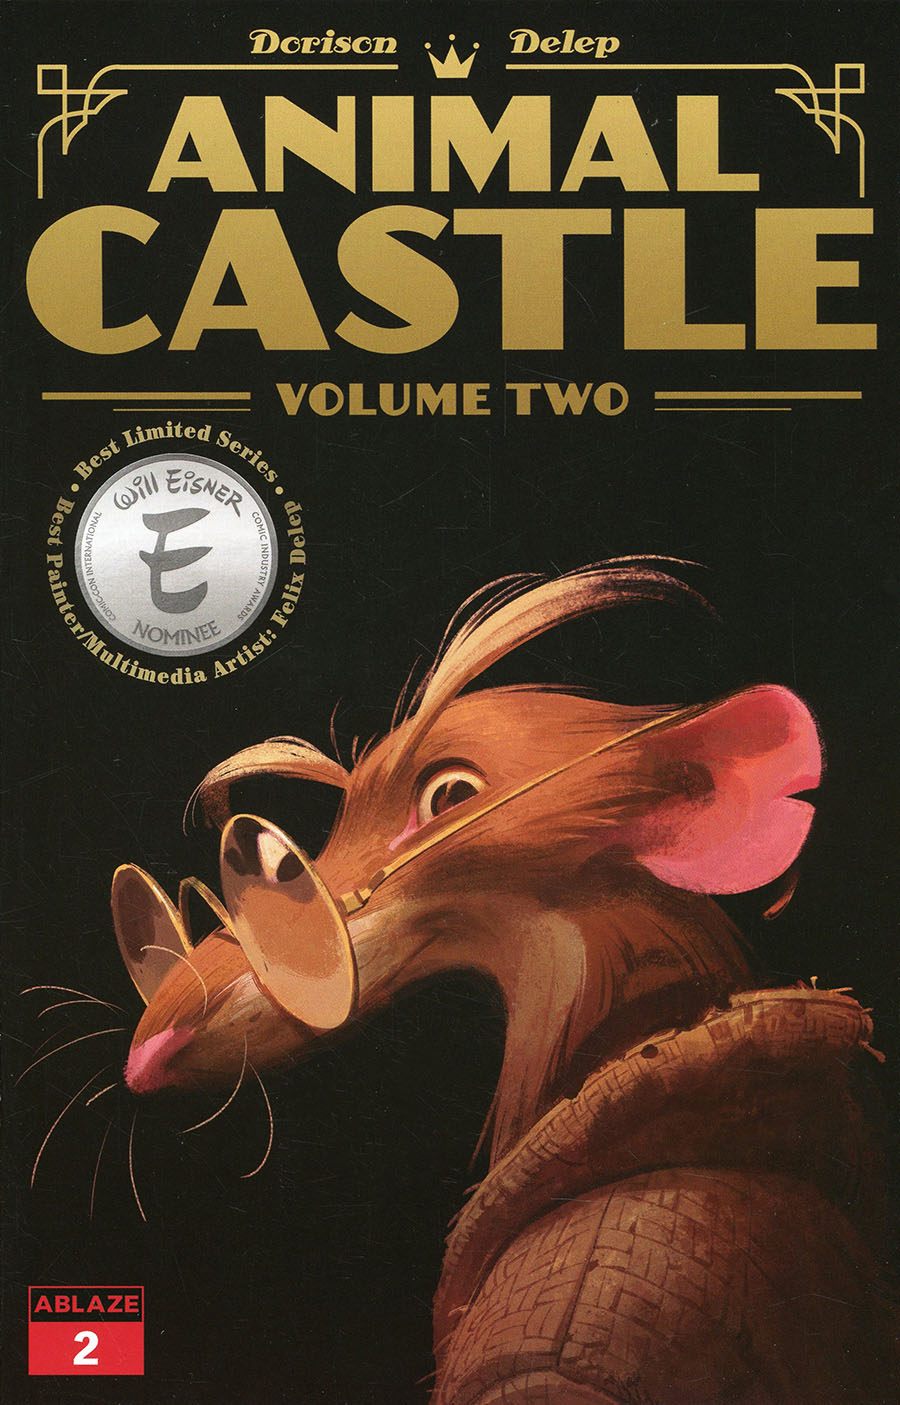 Animal Castle Vol 2 #2 Cover A Regular Felix Delep Alezar Close Up Cover